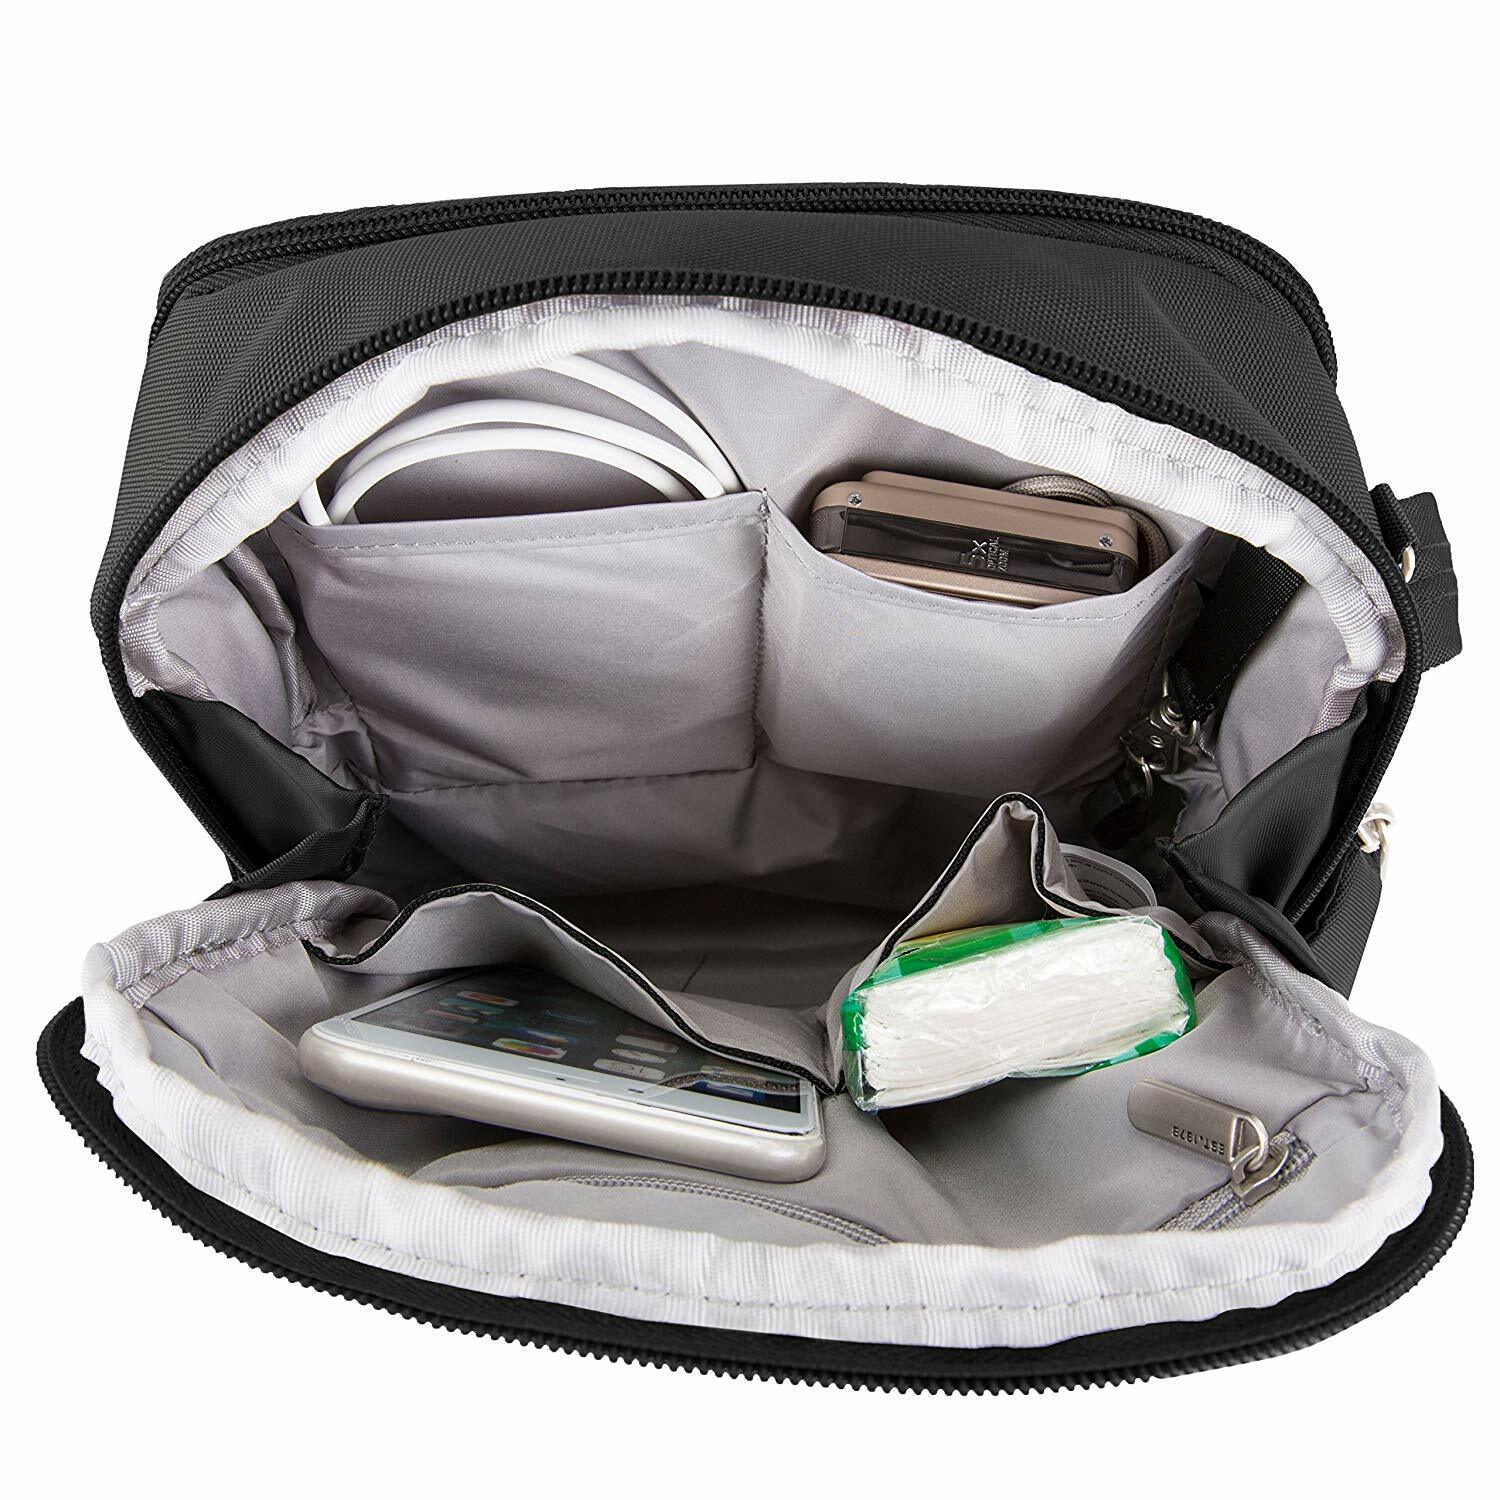 myer travel safe bags